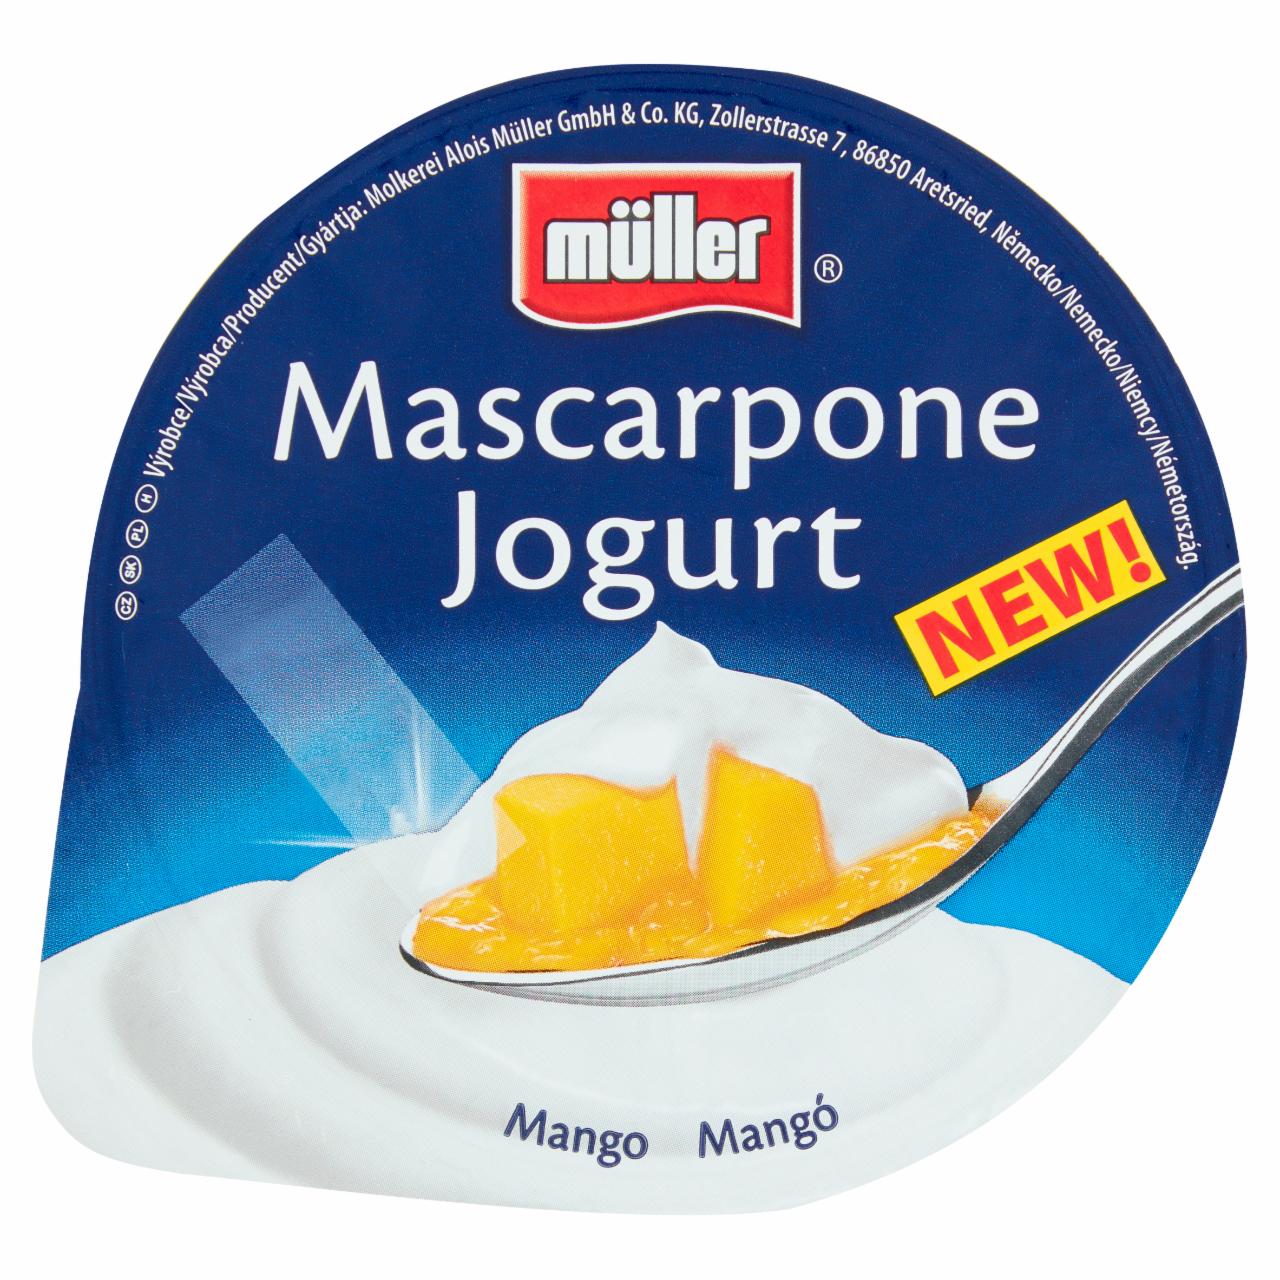 Zdjęcia - Müller Mascarpone Jogurt mango 130 g